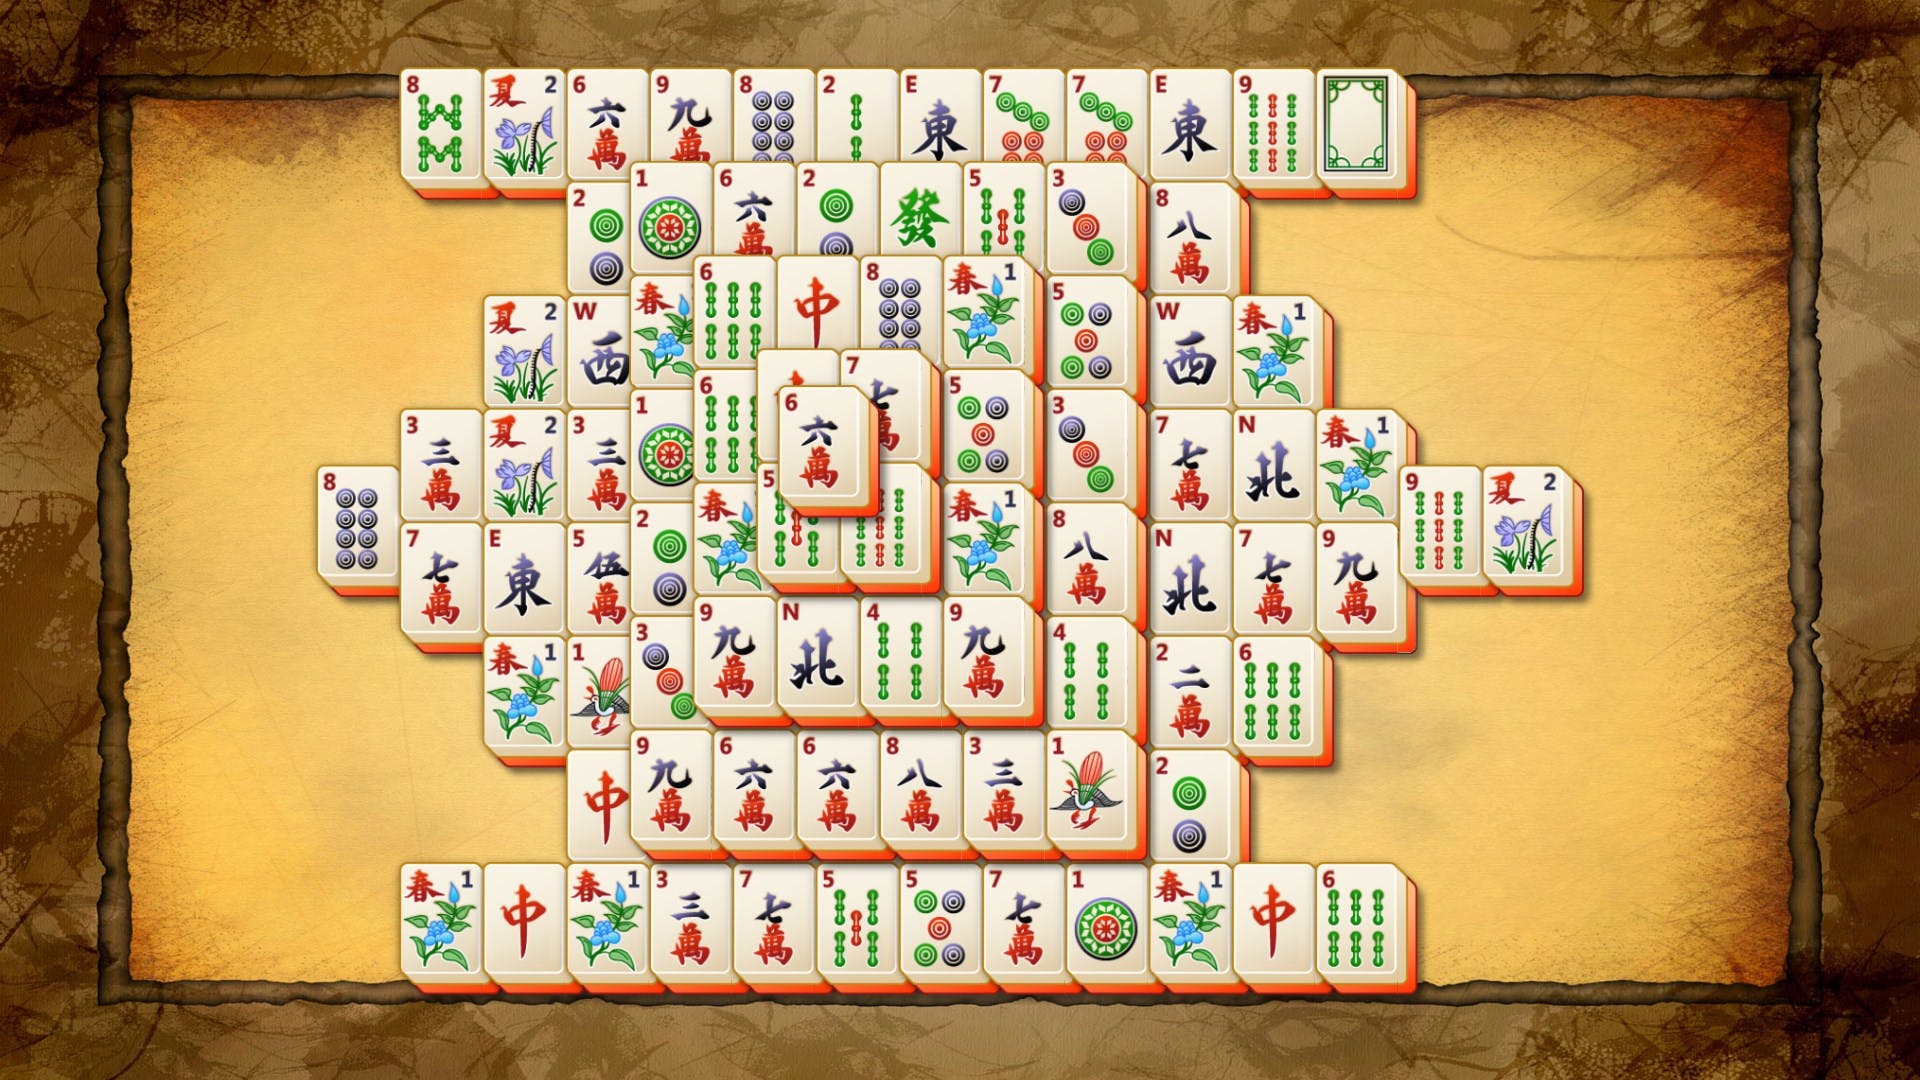 Mahjong Free download the new